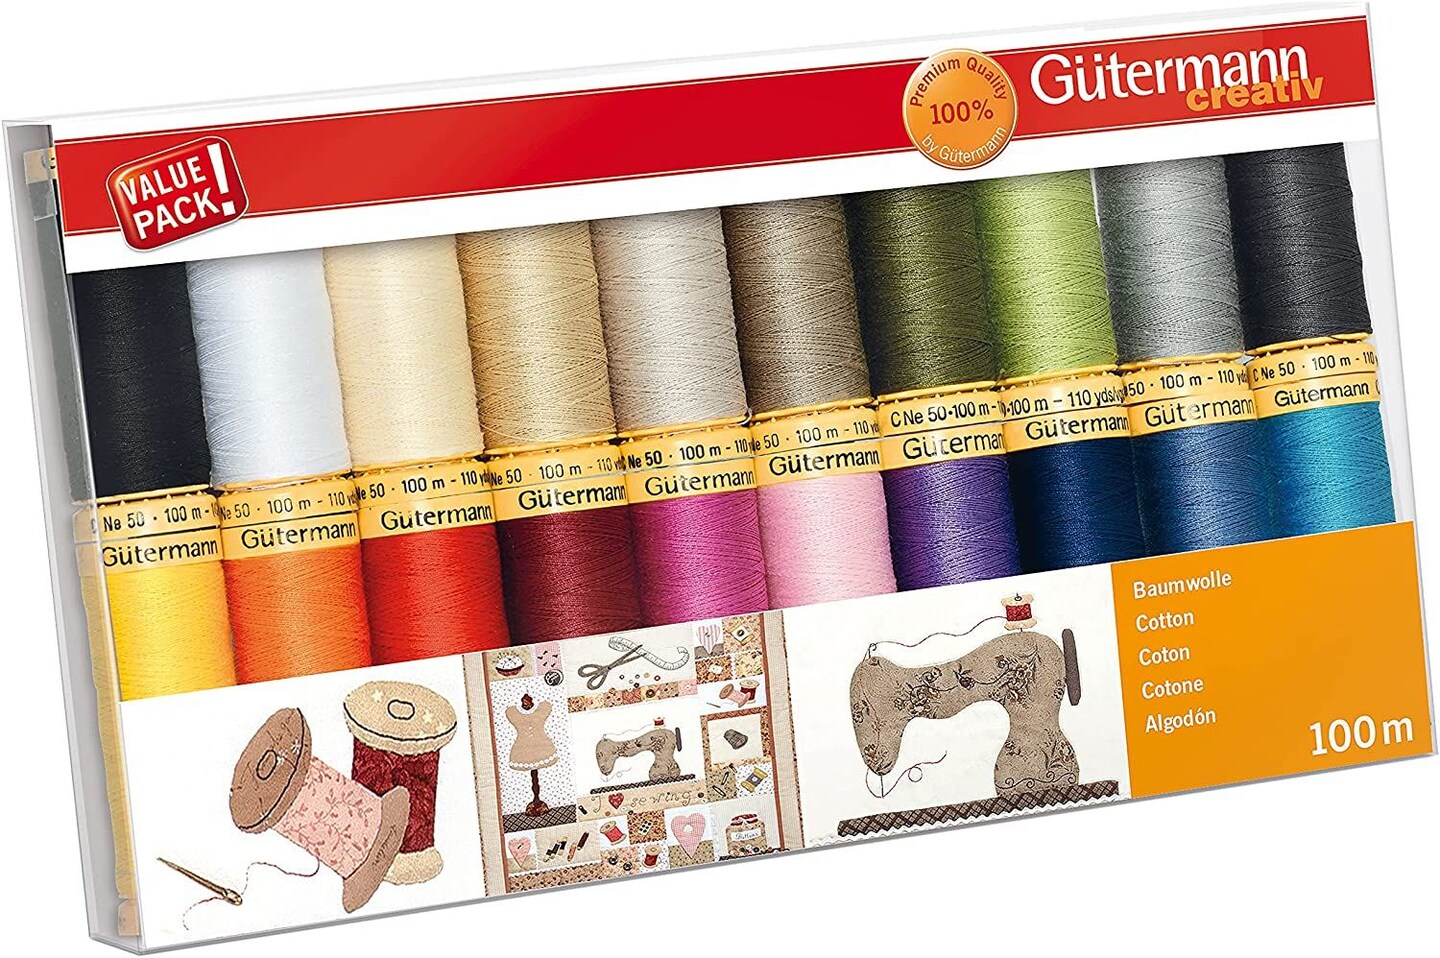 Allary® 24-Piece All Purpose Sewing Thread Set